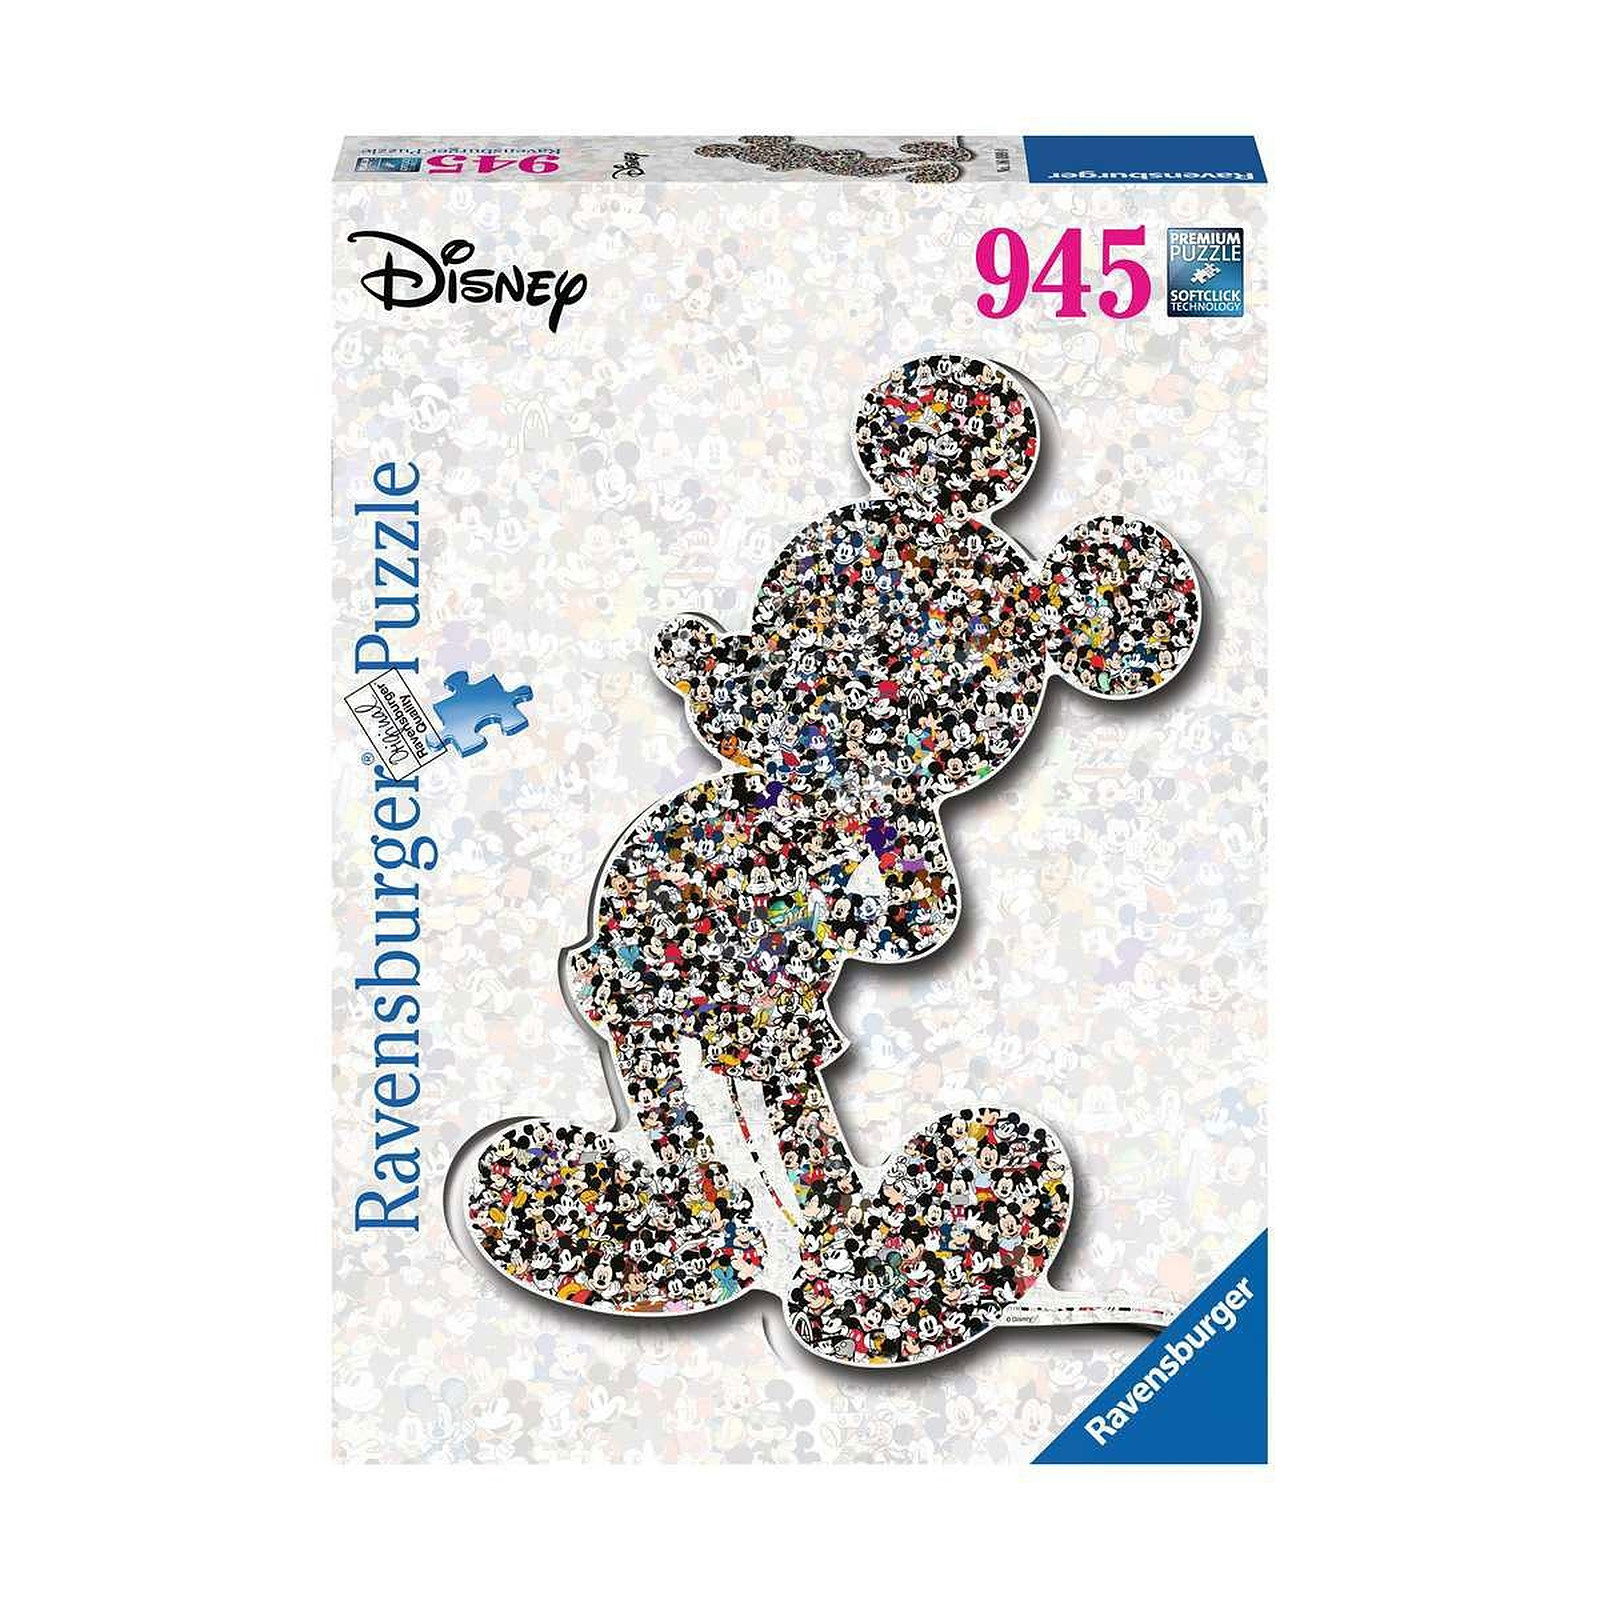 Disney - Puzzle Shaped Mickey (945 pièces) - Puzzle Ravensburger